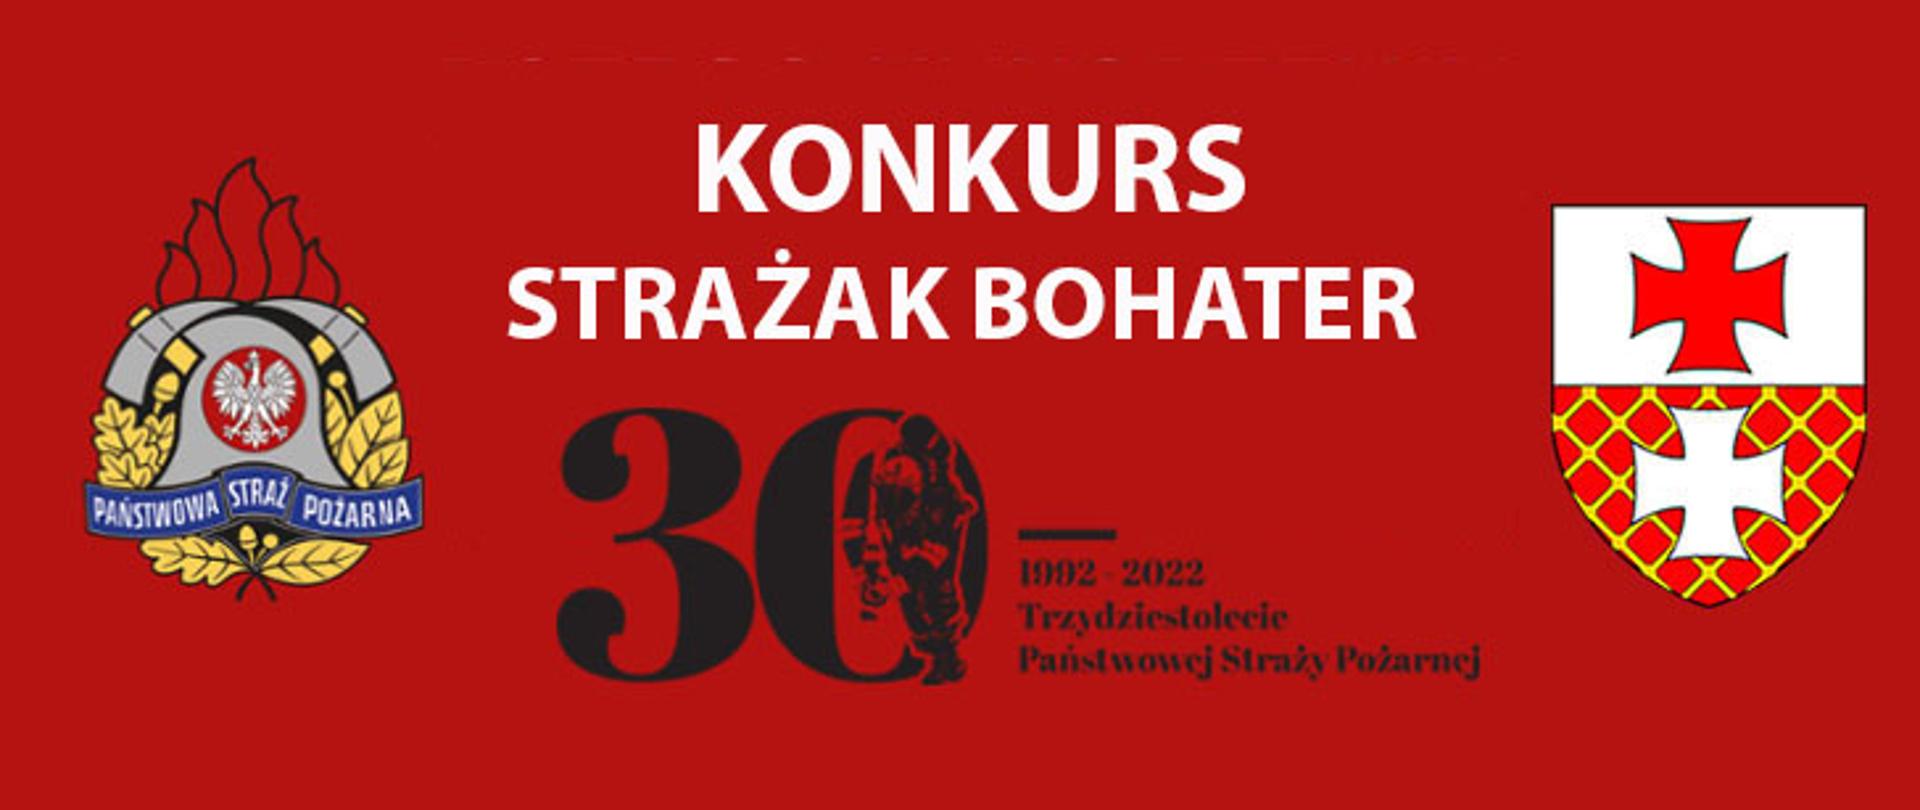 Plakat z napisem Konkurs Strażak Bohater.